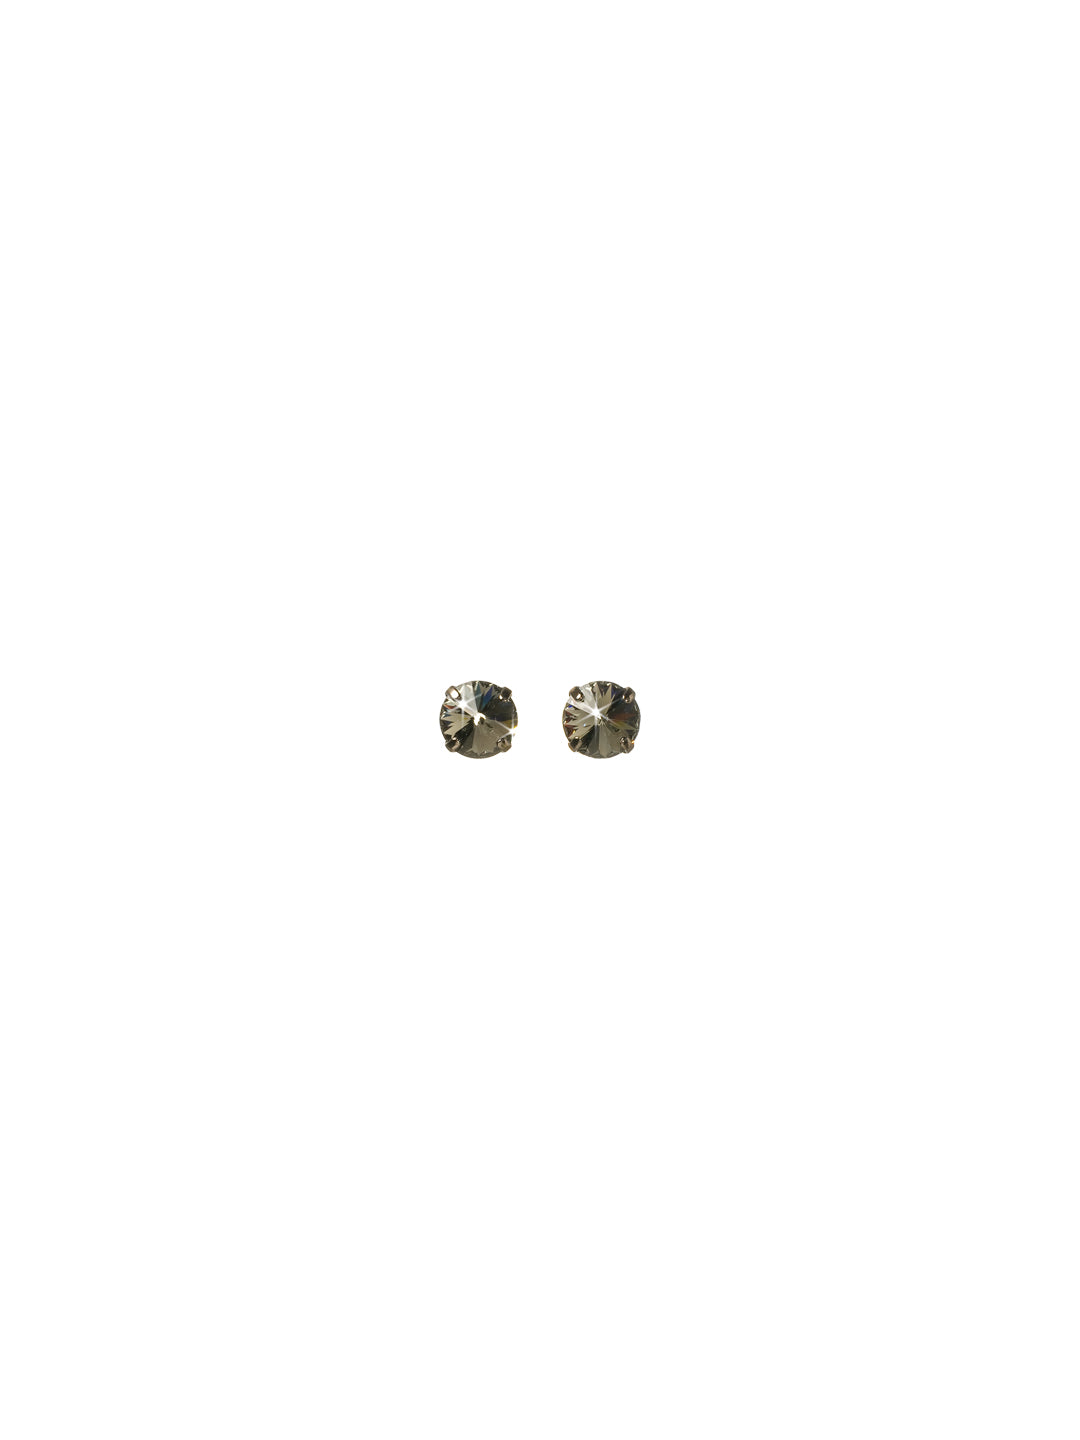 Product Image: London Stud Earrings